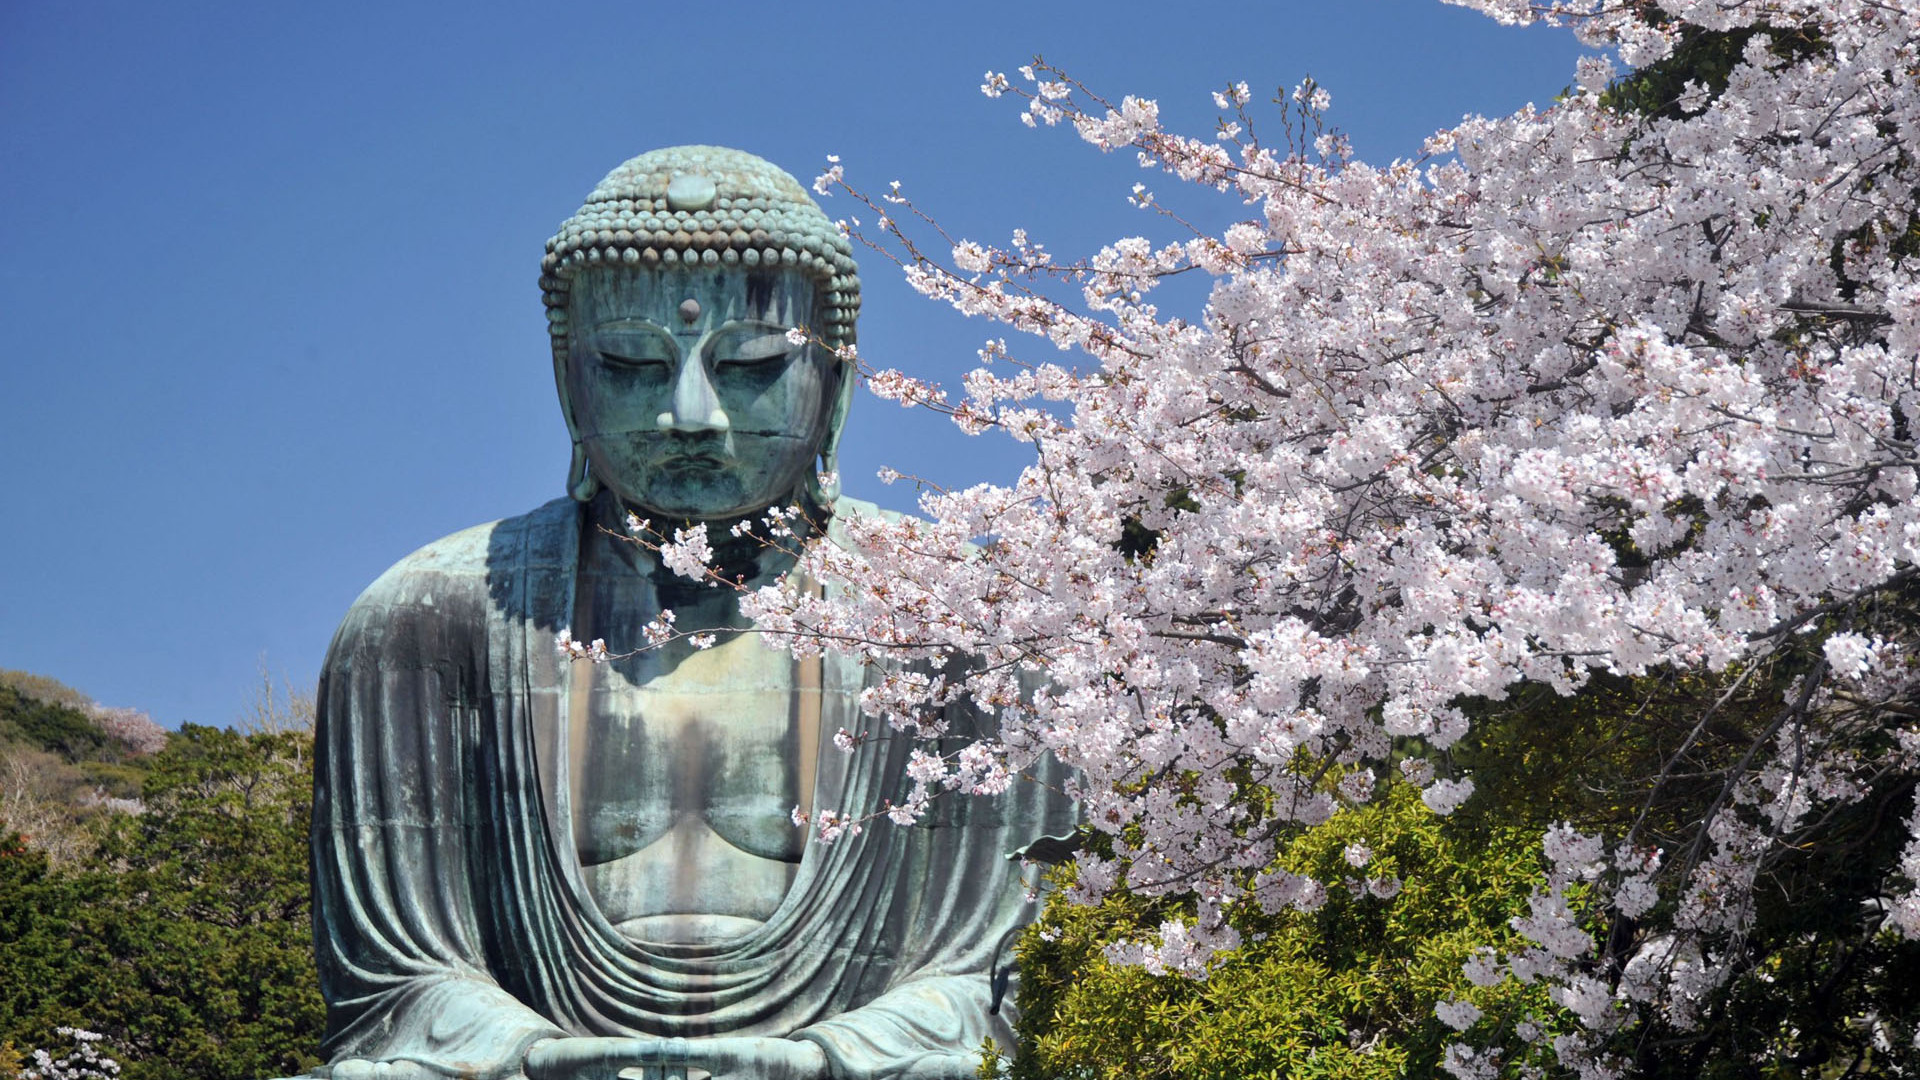 Kotoku-in / Großer Buddha von Kamakura